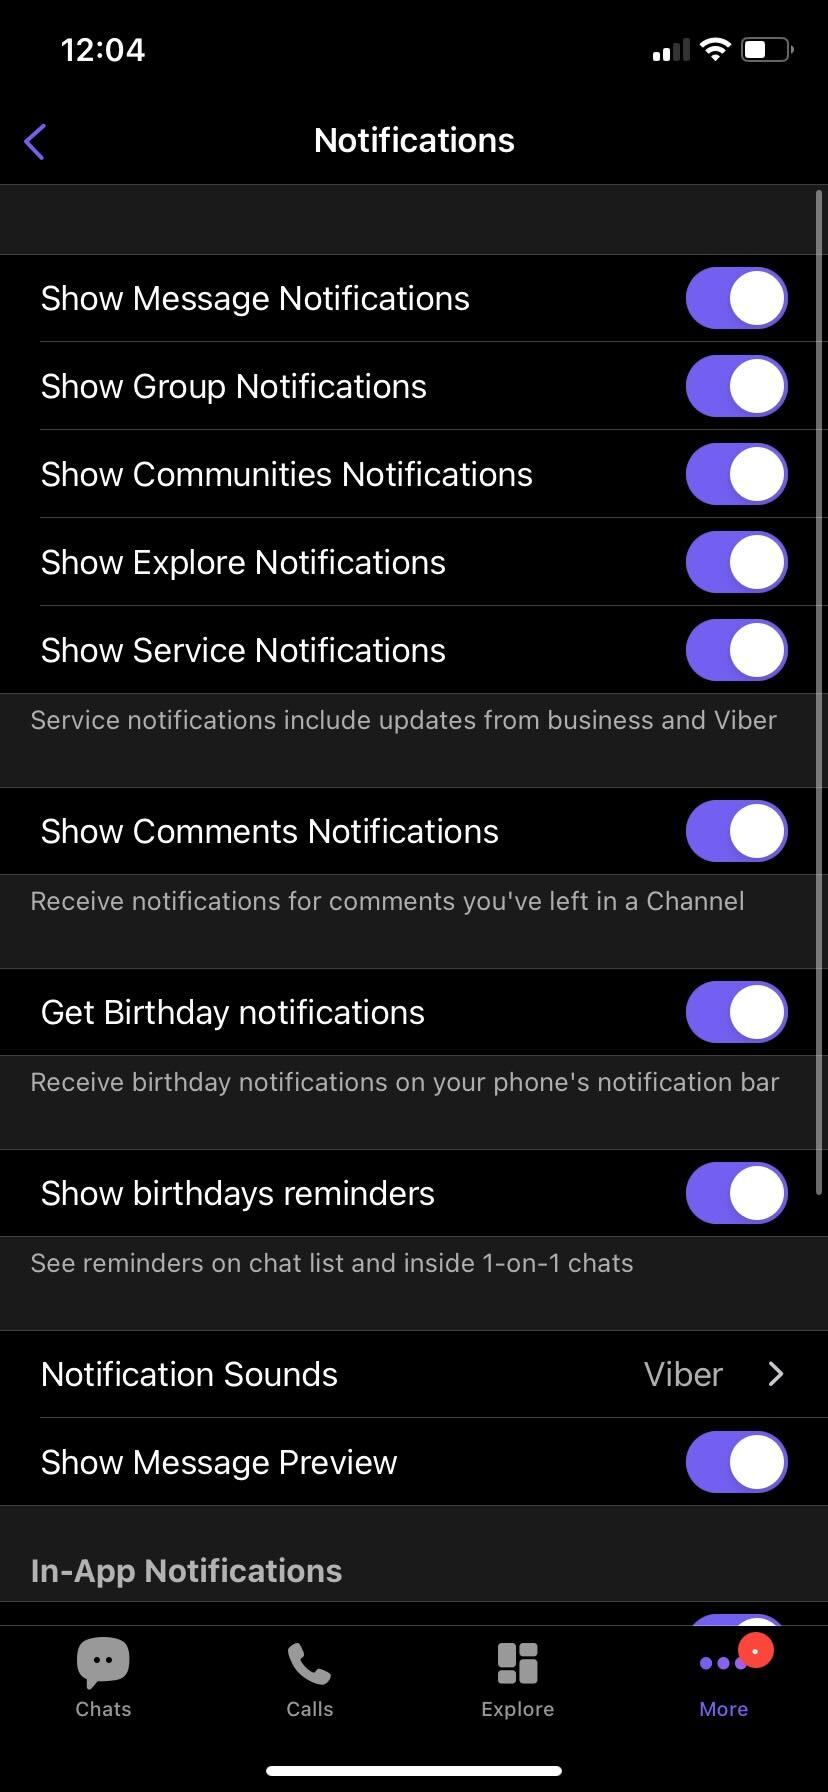 Viber iOS Show message preview